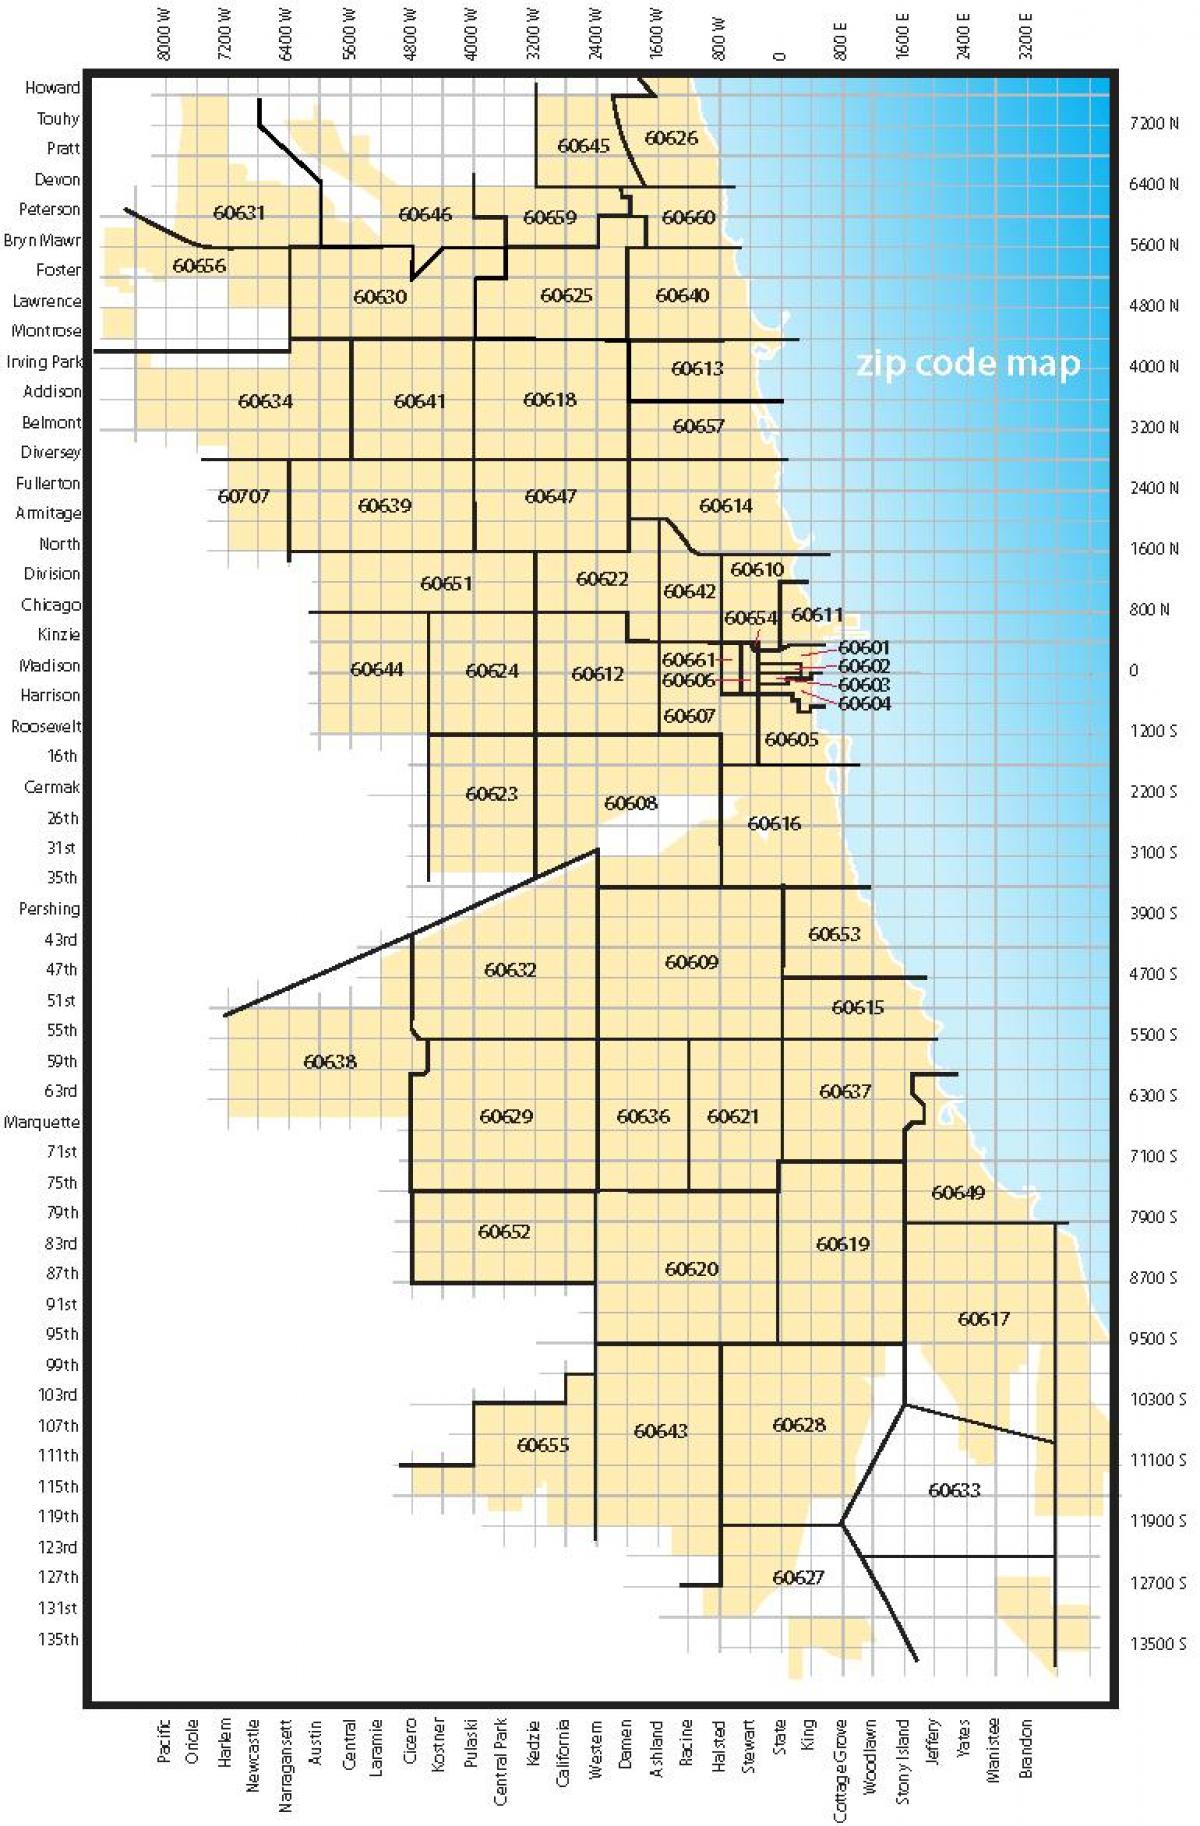 Chicago kode area peta